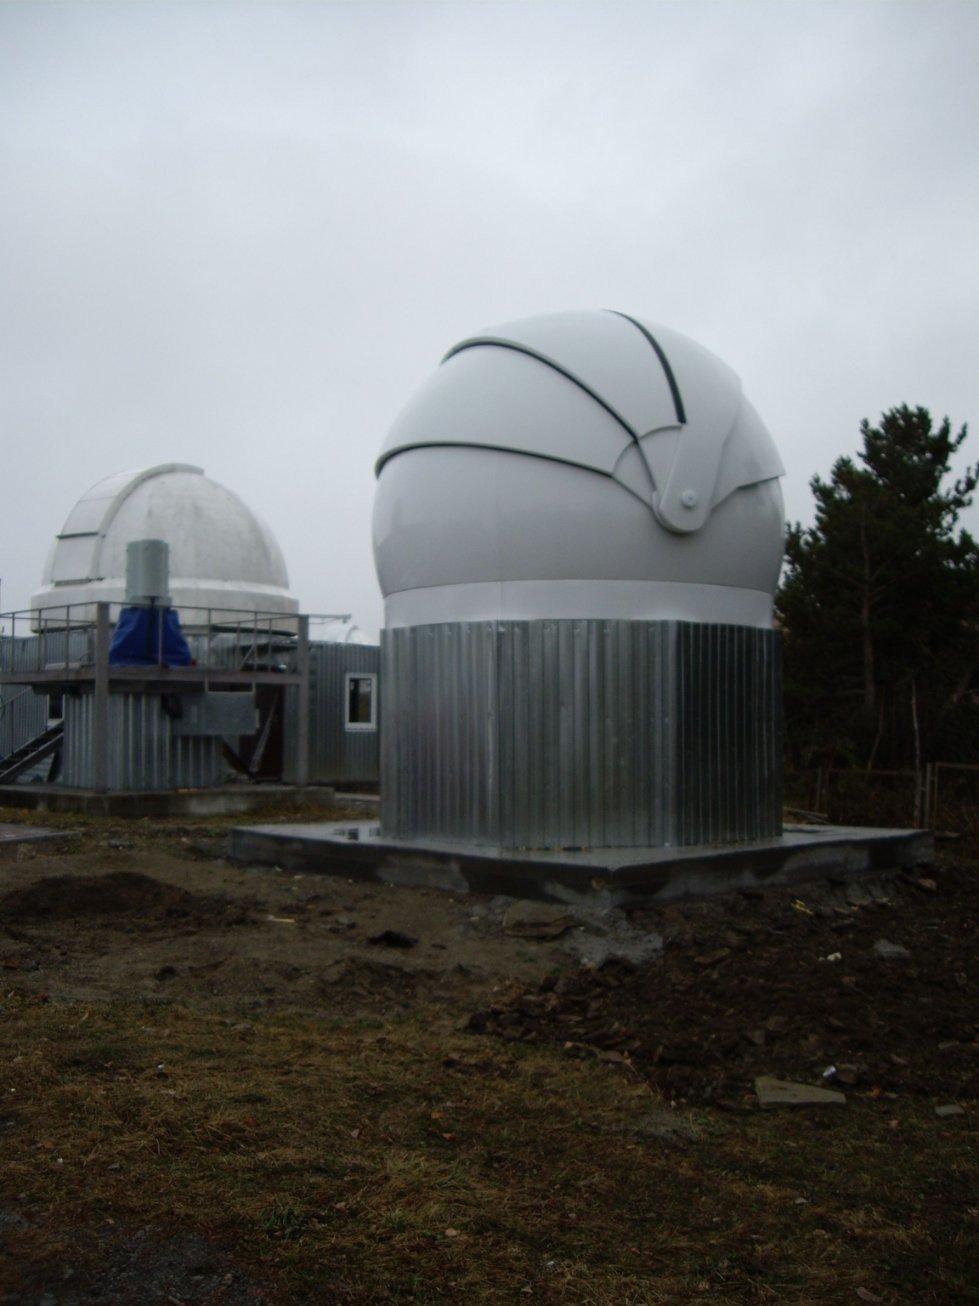 Observations on the telescope BTA (2009)